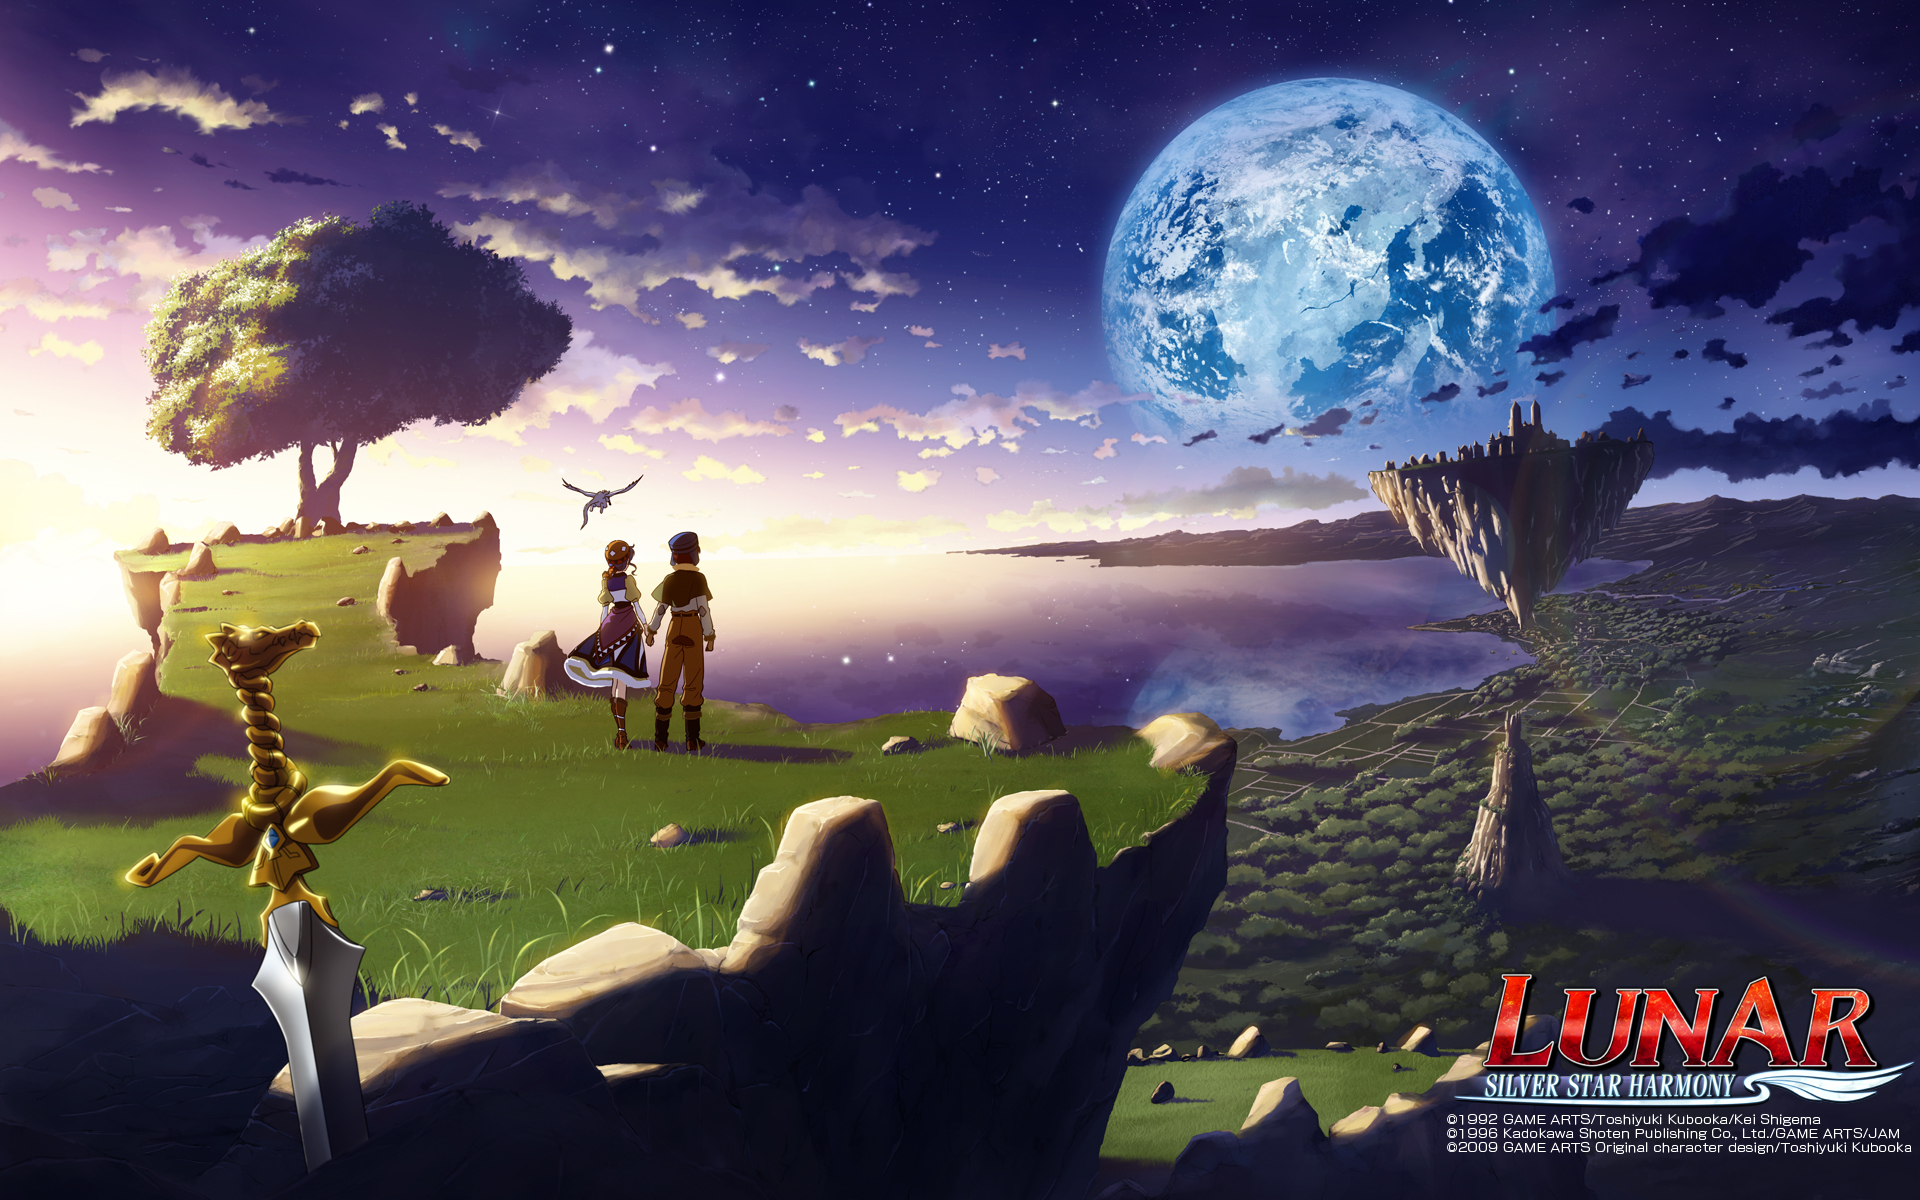 Lunar Silver Star Harmony Wallpaper Game Arts Co Ltd